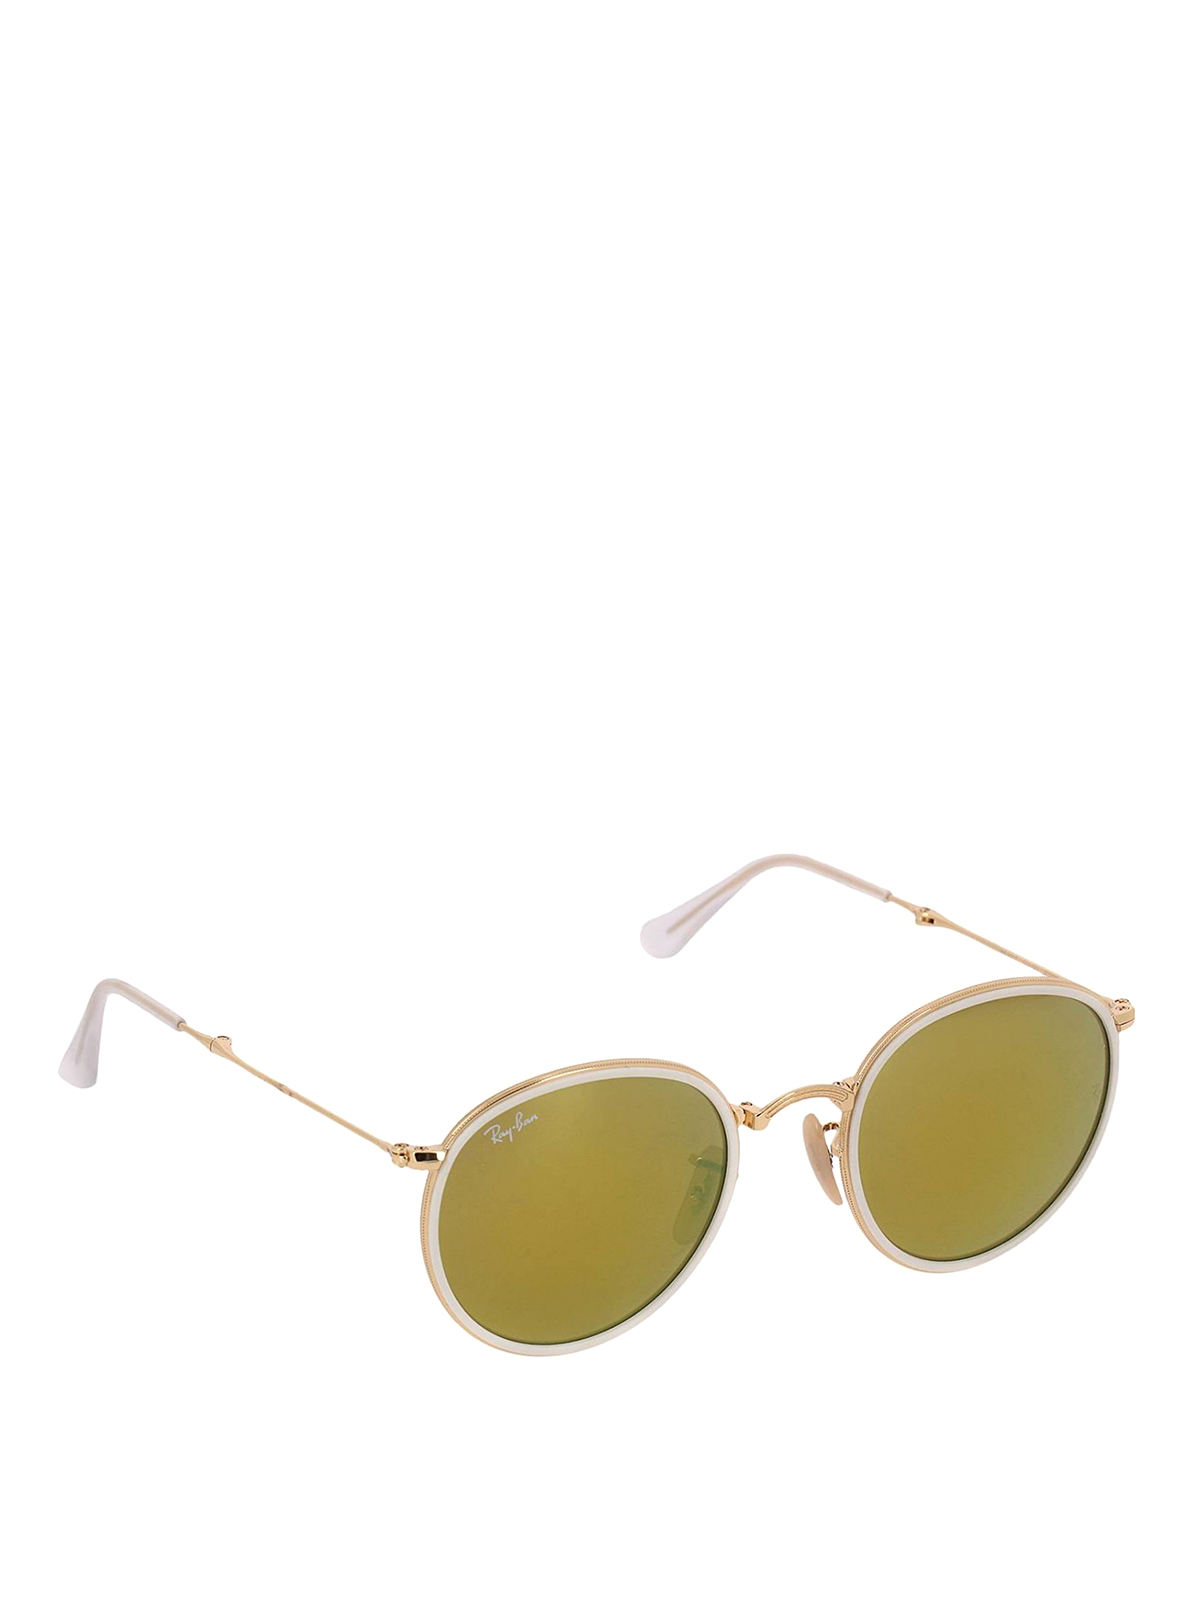 yellow frame ray ban sunglasses